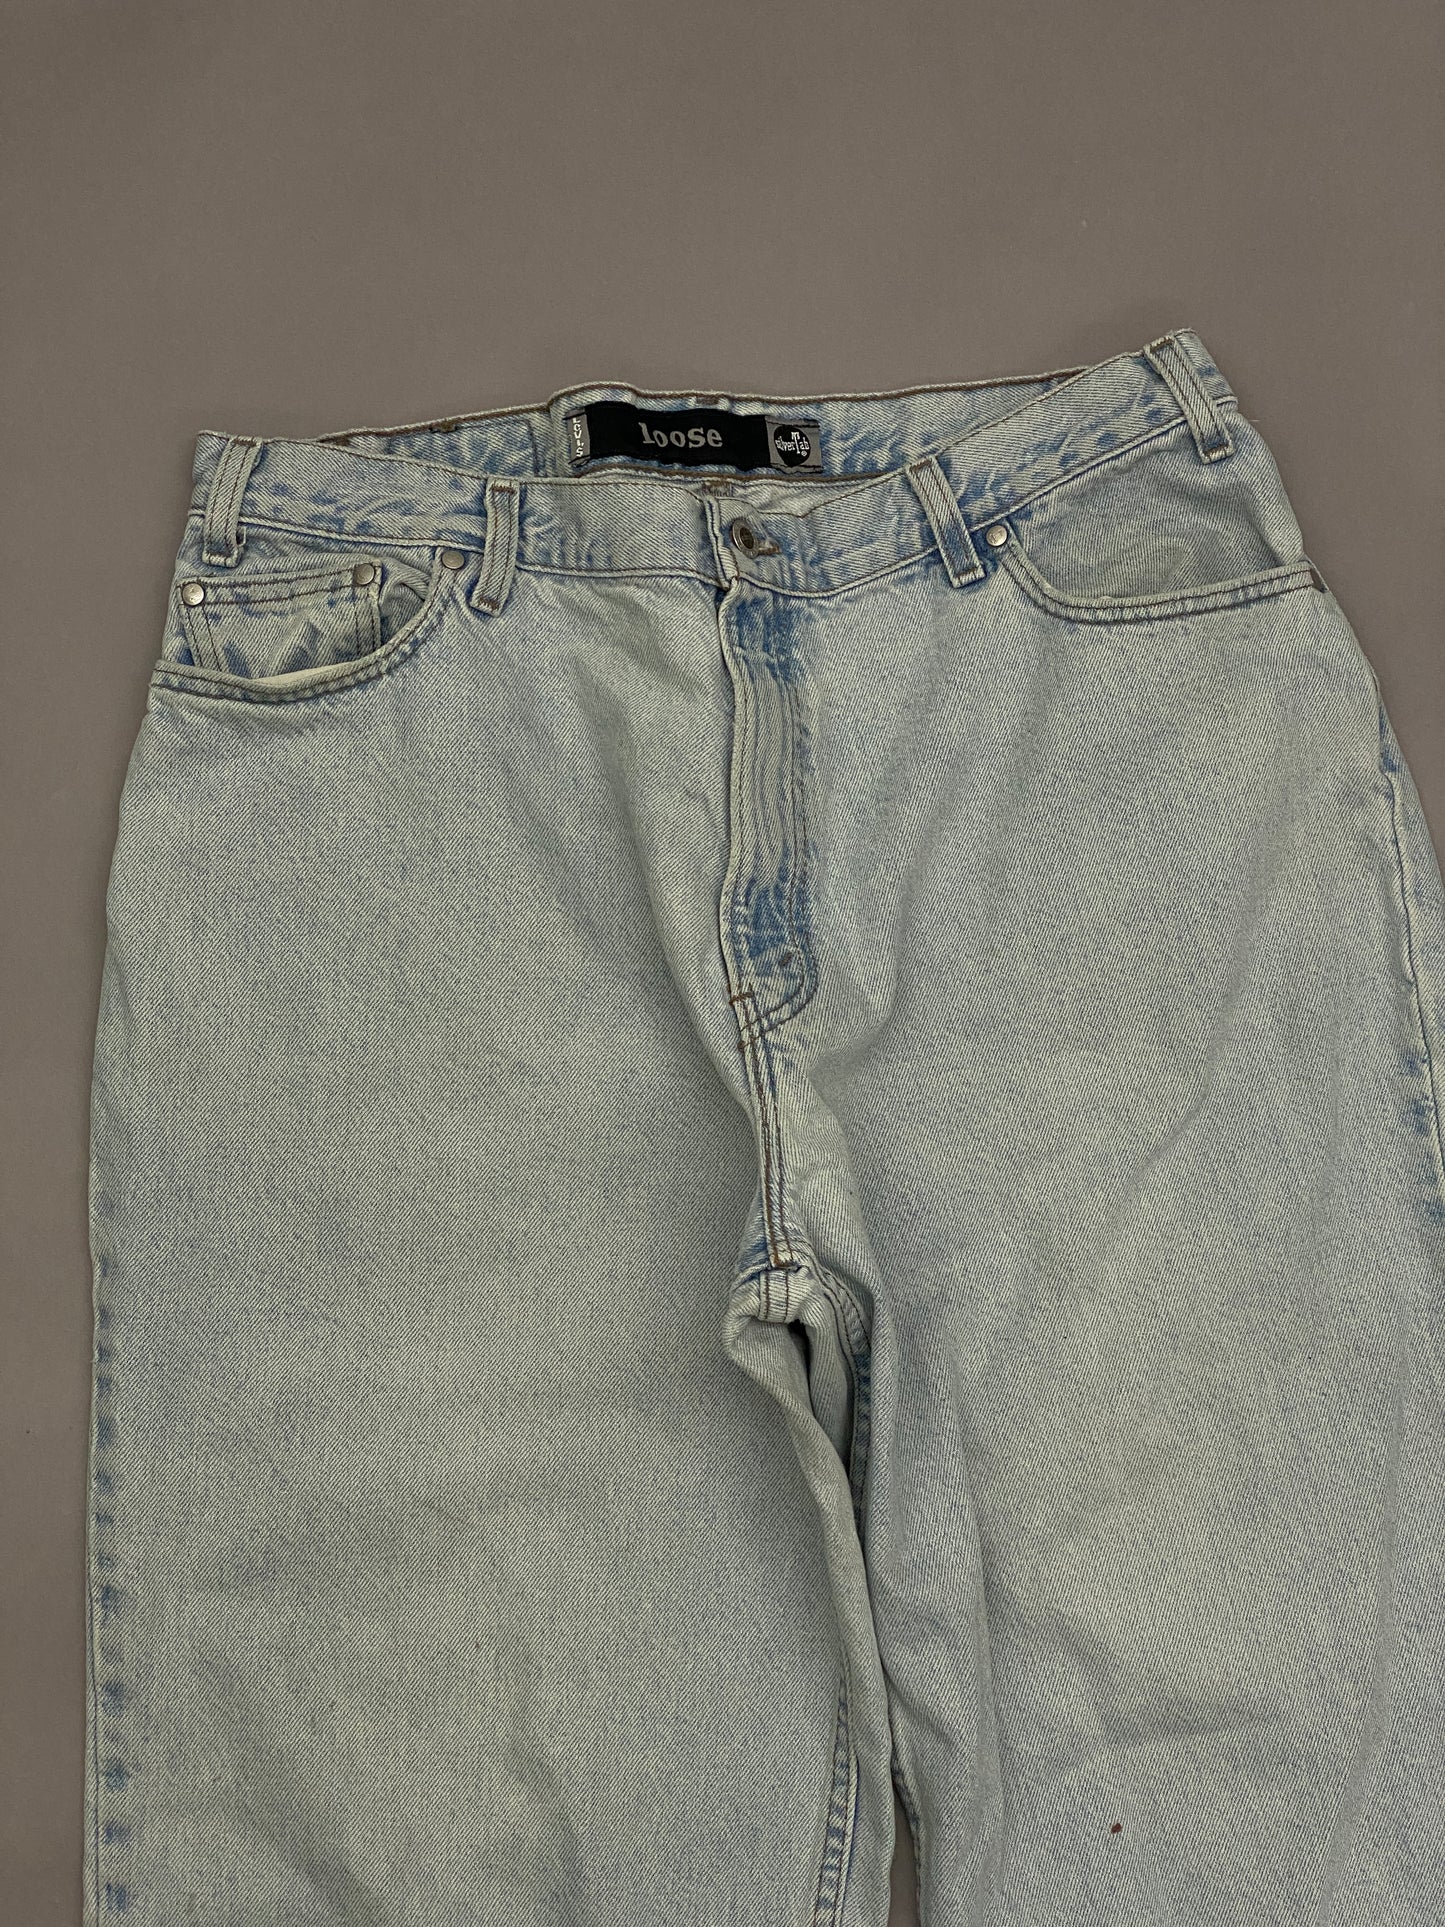 Levis Silvertab Loose Vintage Jeans - 36